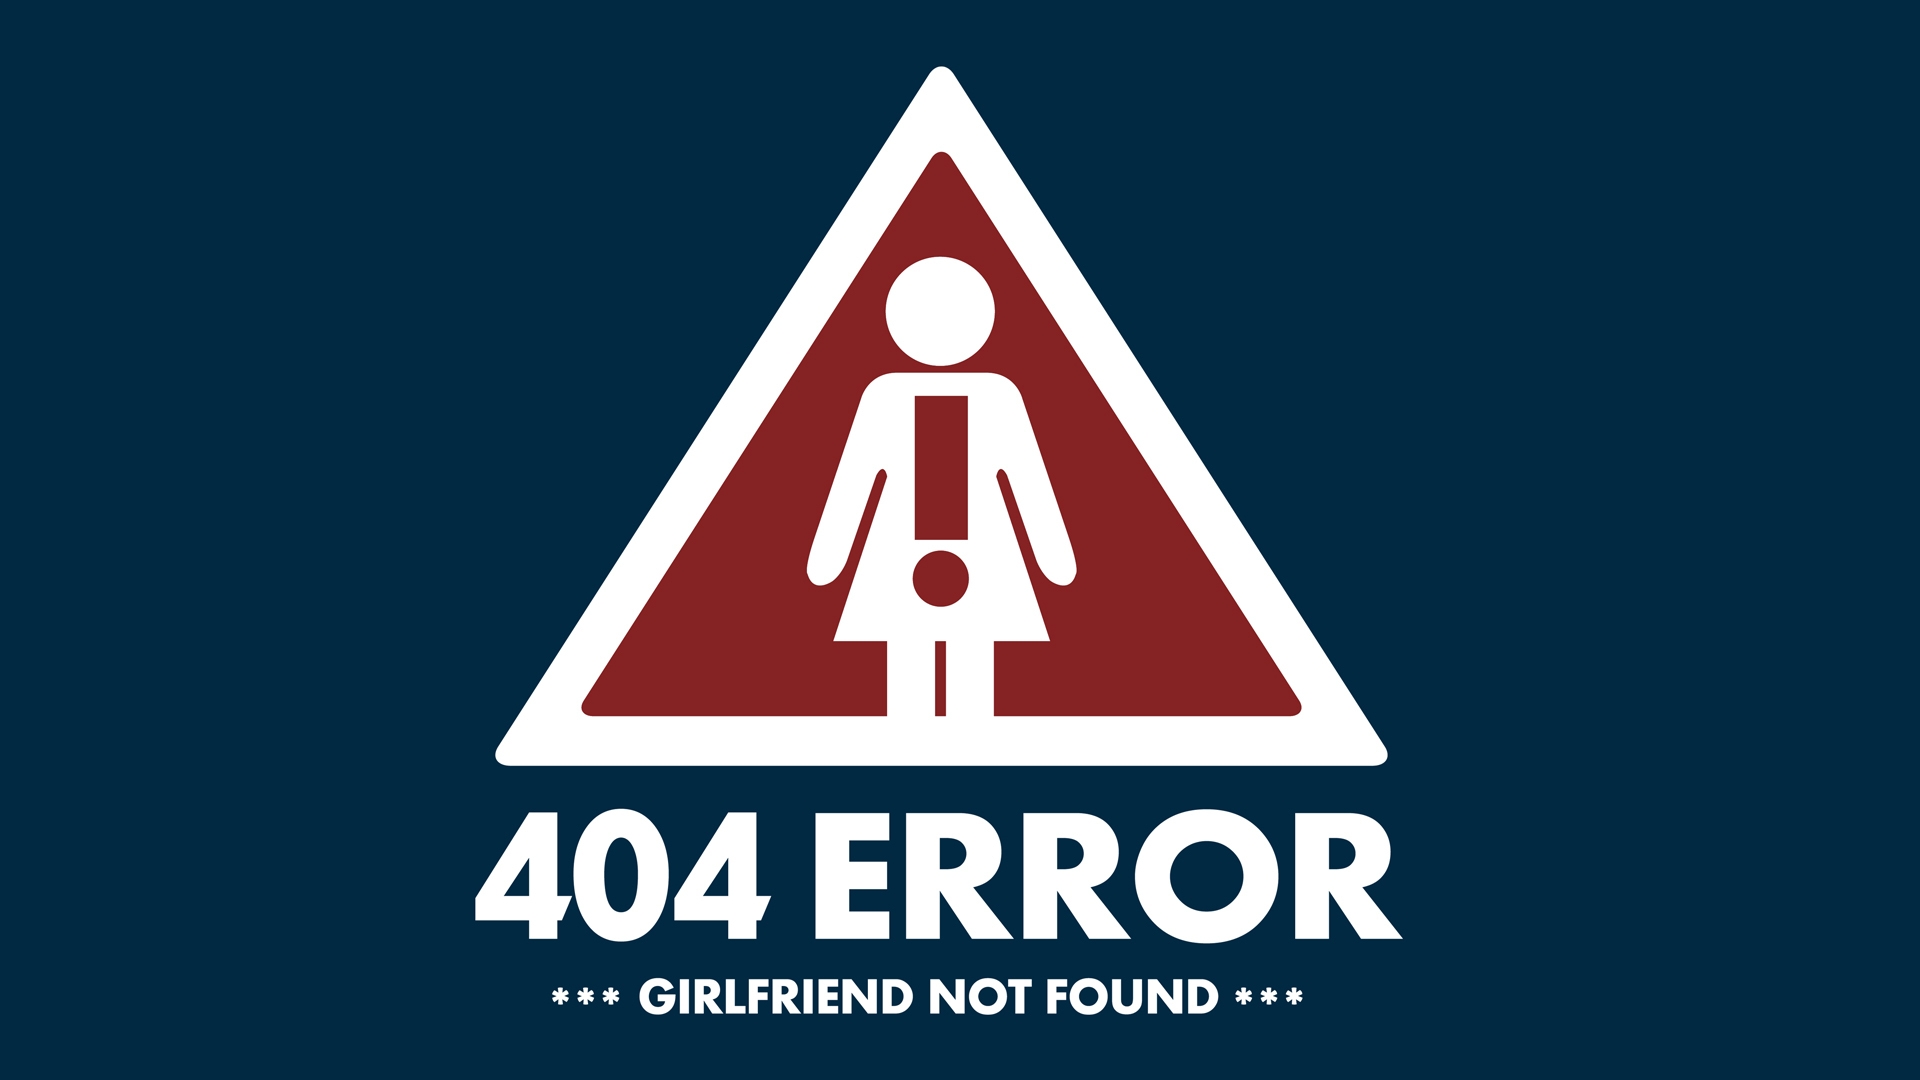 Wallpapers 404 error error 404 page fault on the desktop